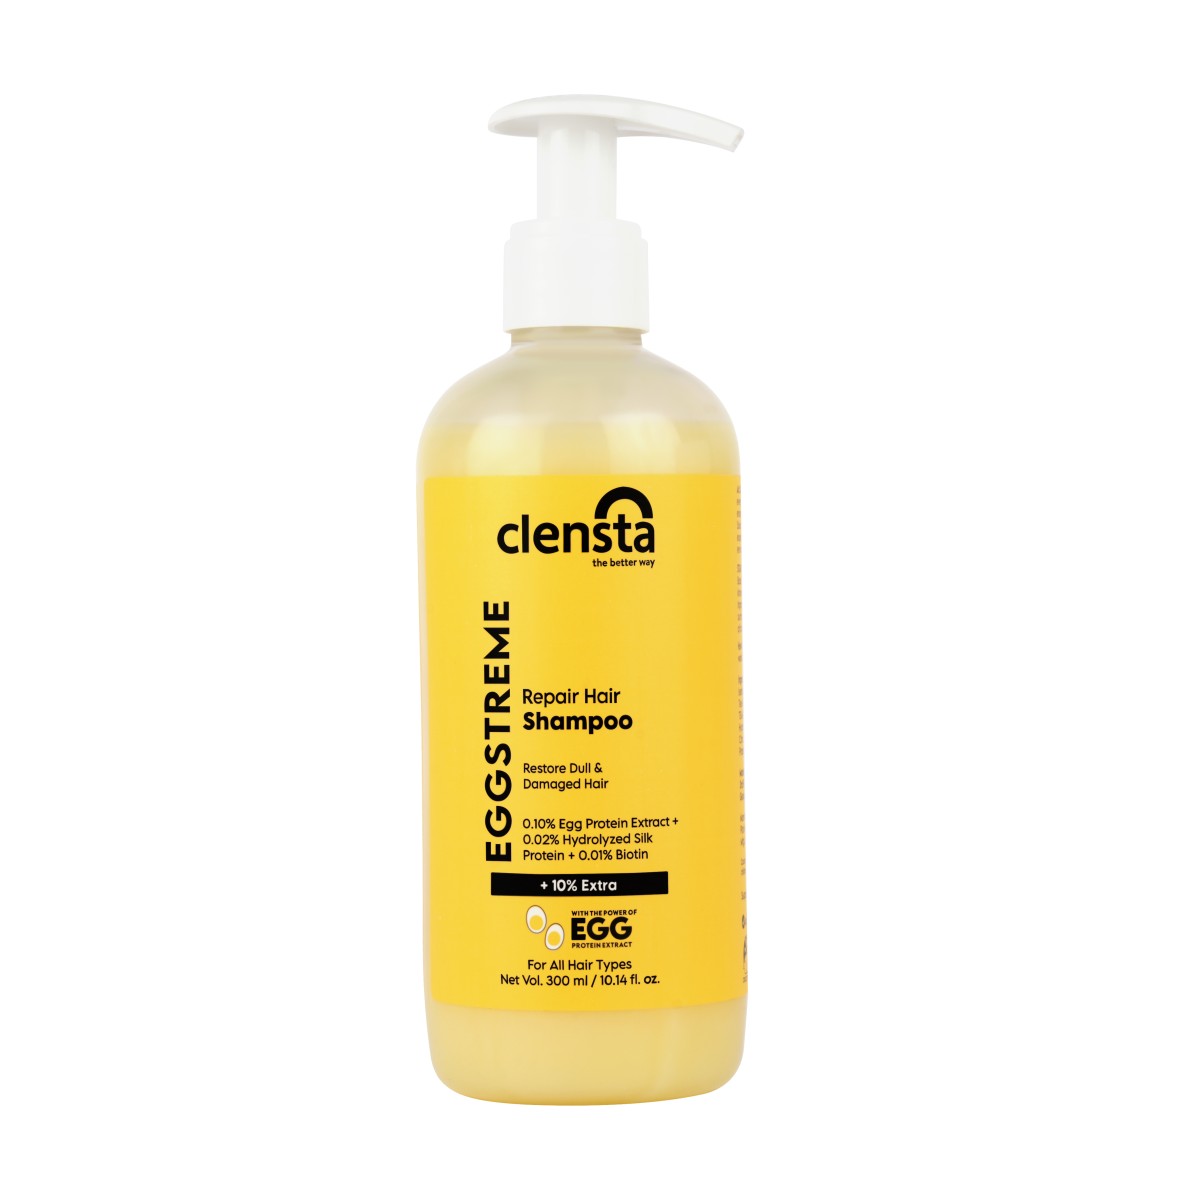 Eggstreme Repair Hair Shampoo with 0.10% Egg Protein Extract, 0.02% Hydrolyzed Silk Protein, 0.01% Biotin